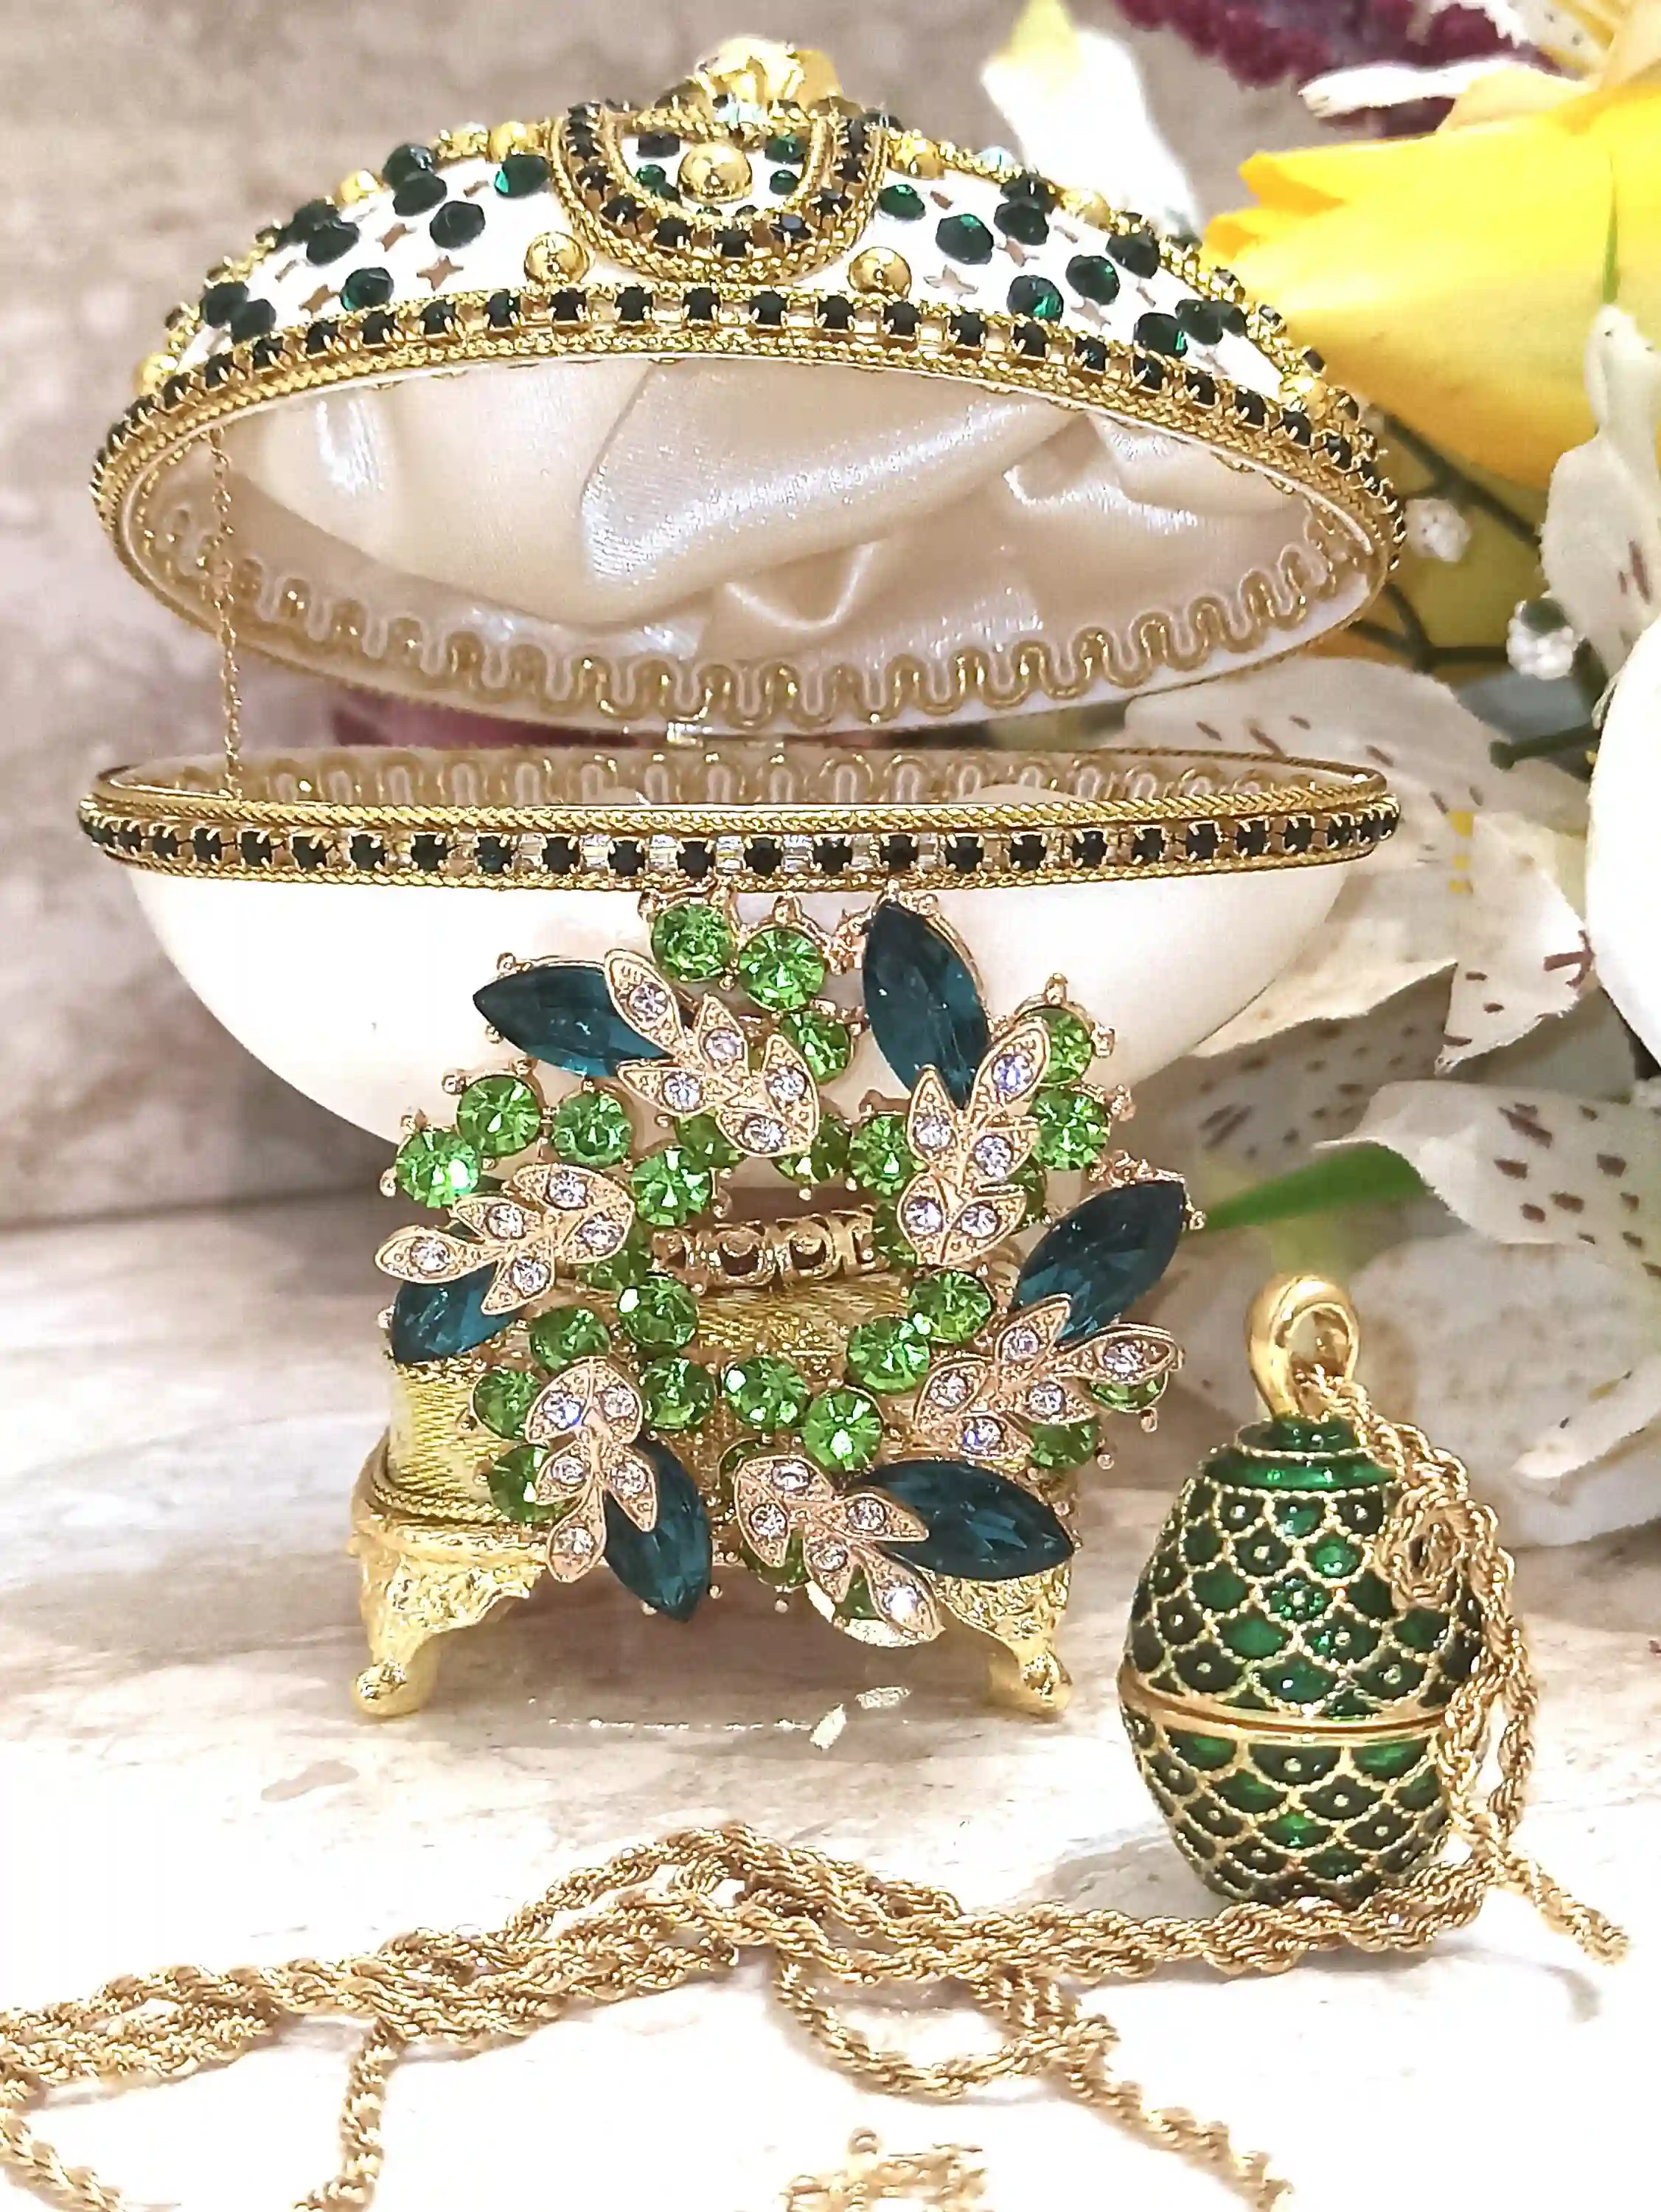 Faberge egg ,Faberge Egg Pendant, Emerald Gold Bracelet, Unique Wedding gift Ideas,Unique Art, Home Decor Ornament,Faberge egg style Jewelry 